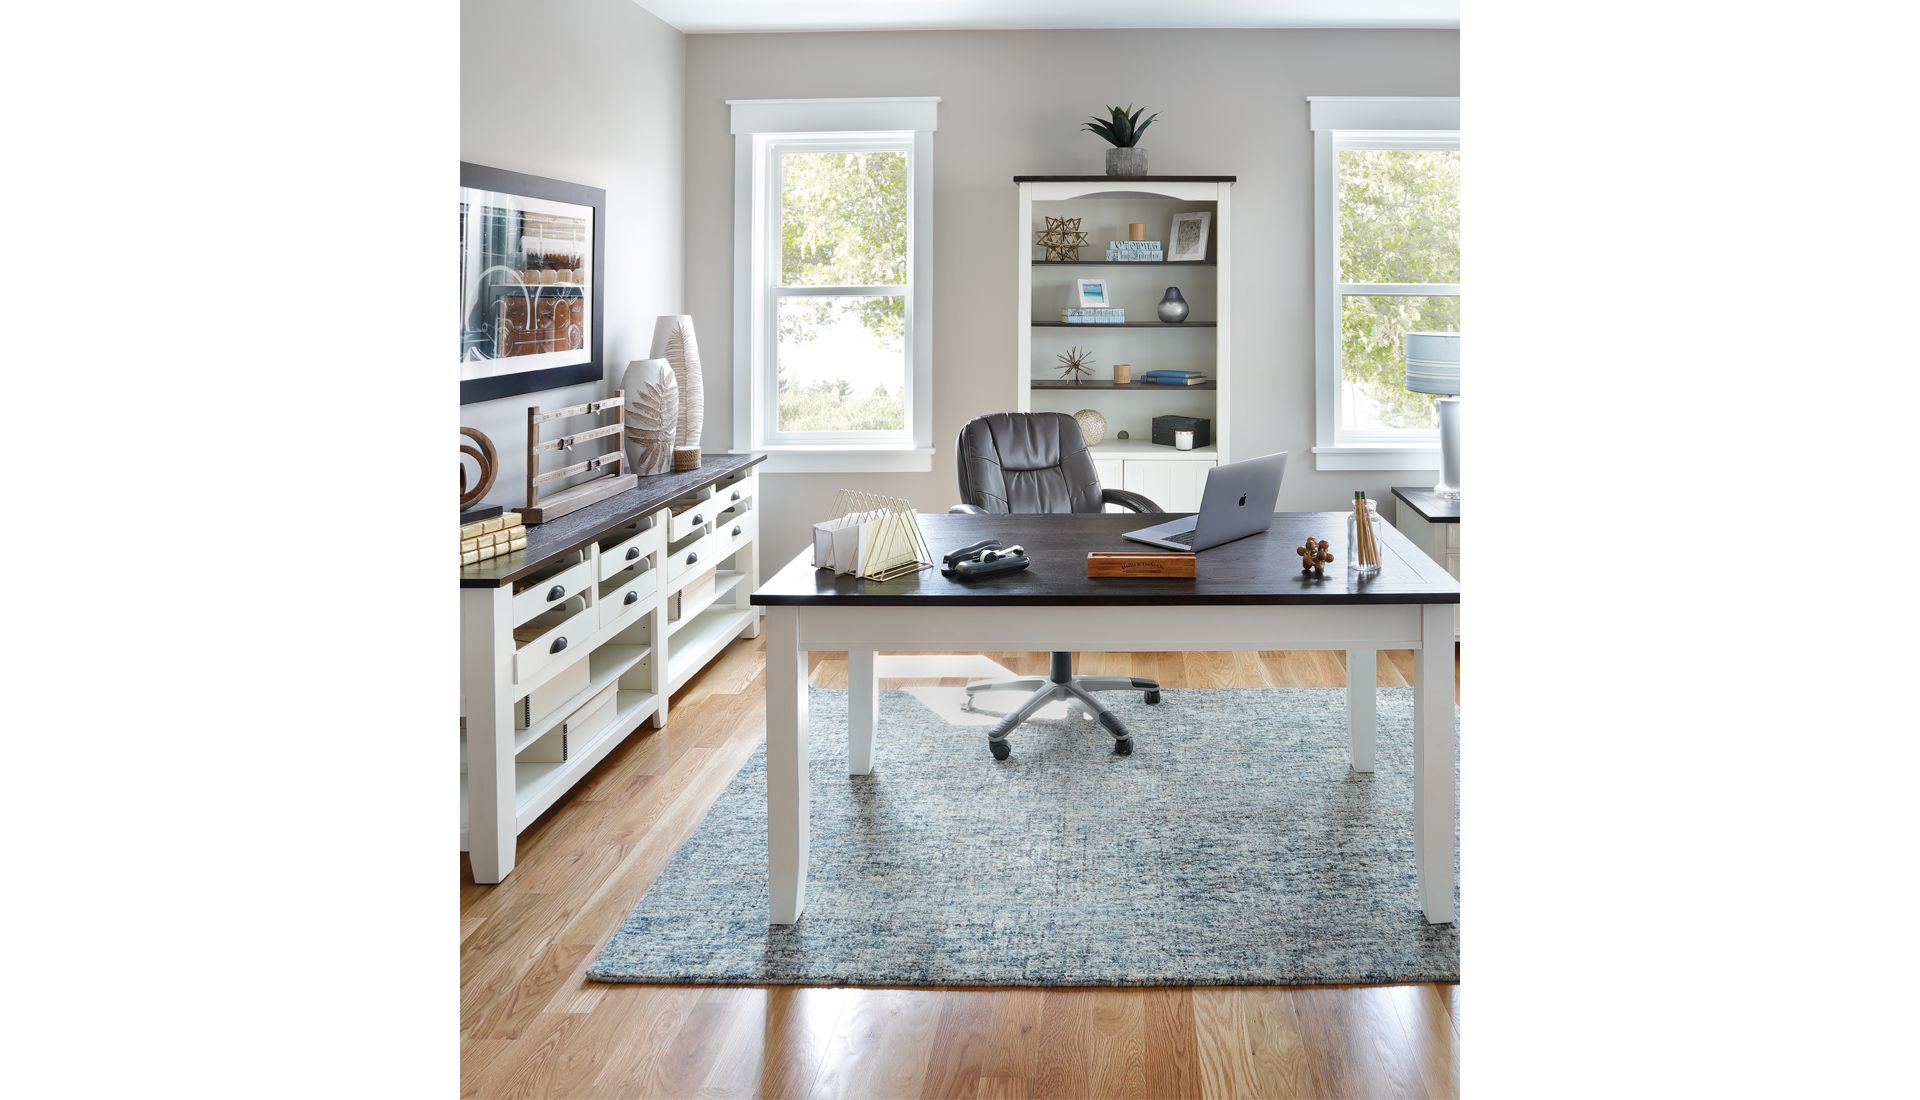 Home Office Desk - Wing Shelf Desk Accessories, Work From Home Desks